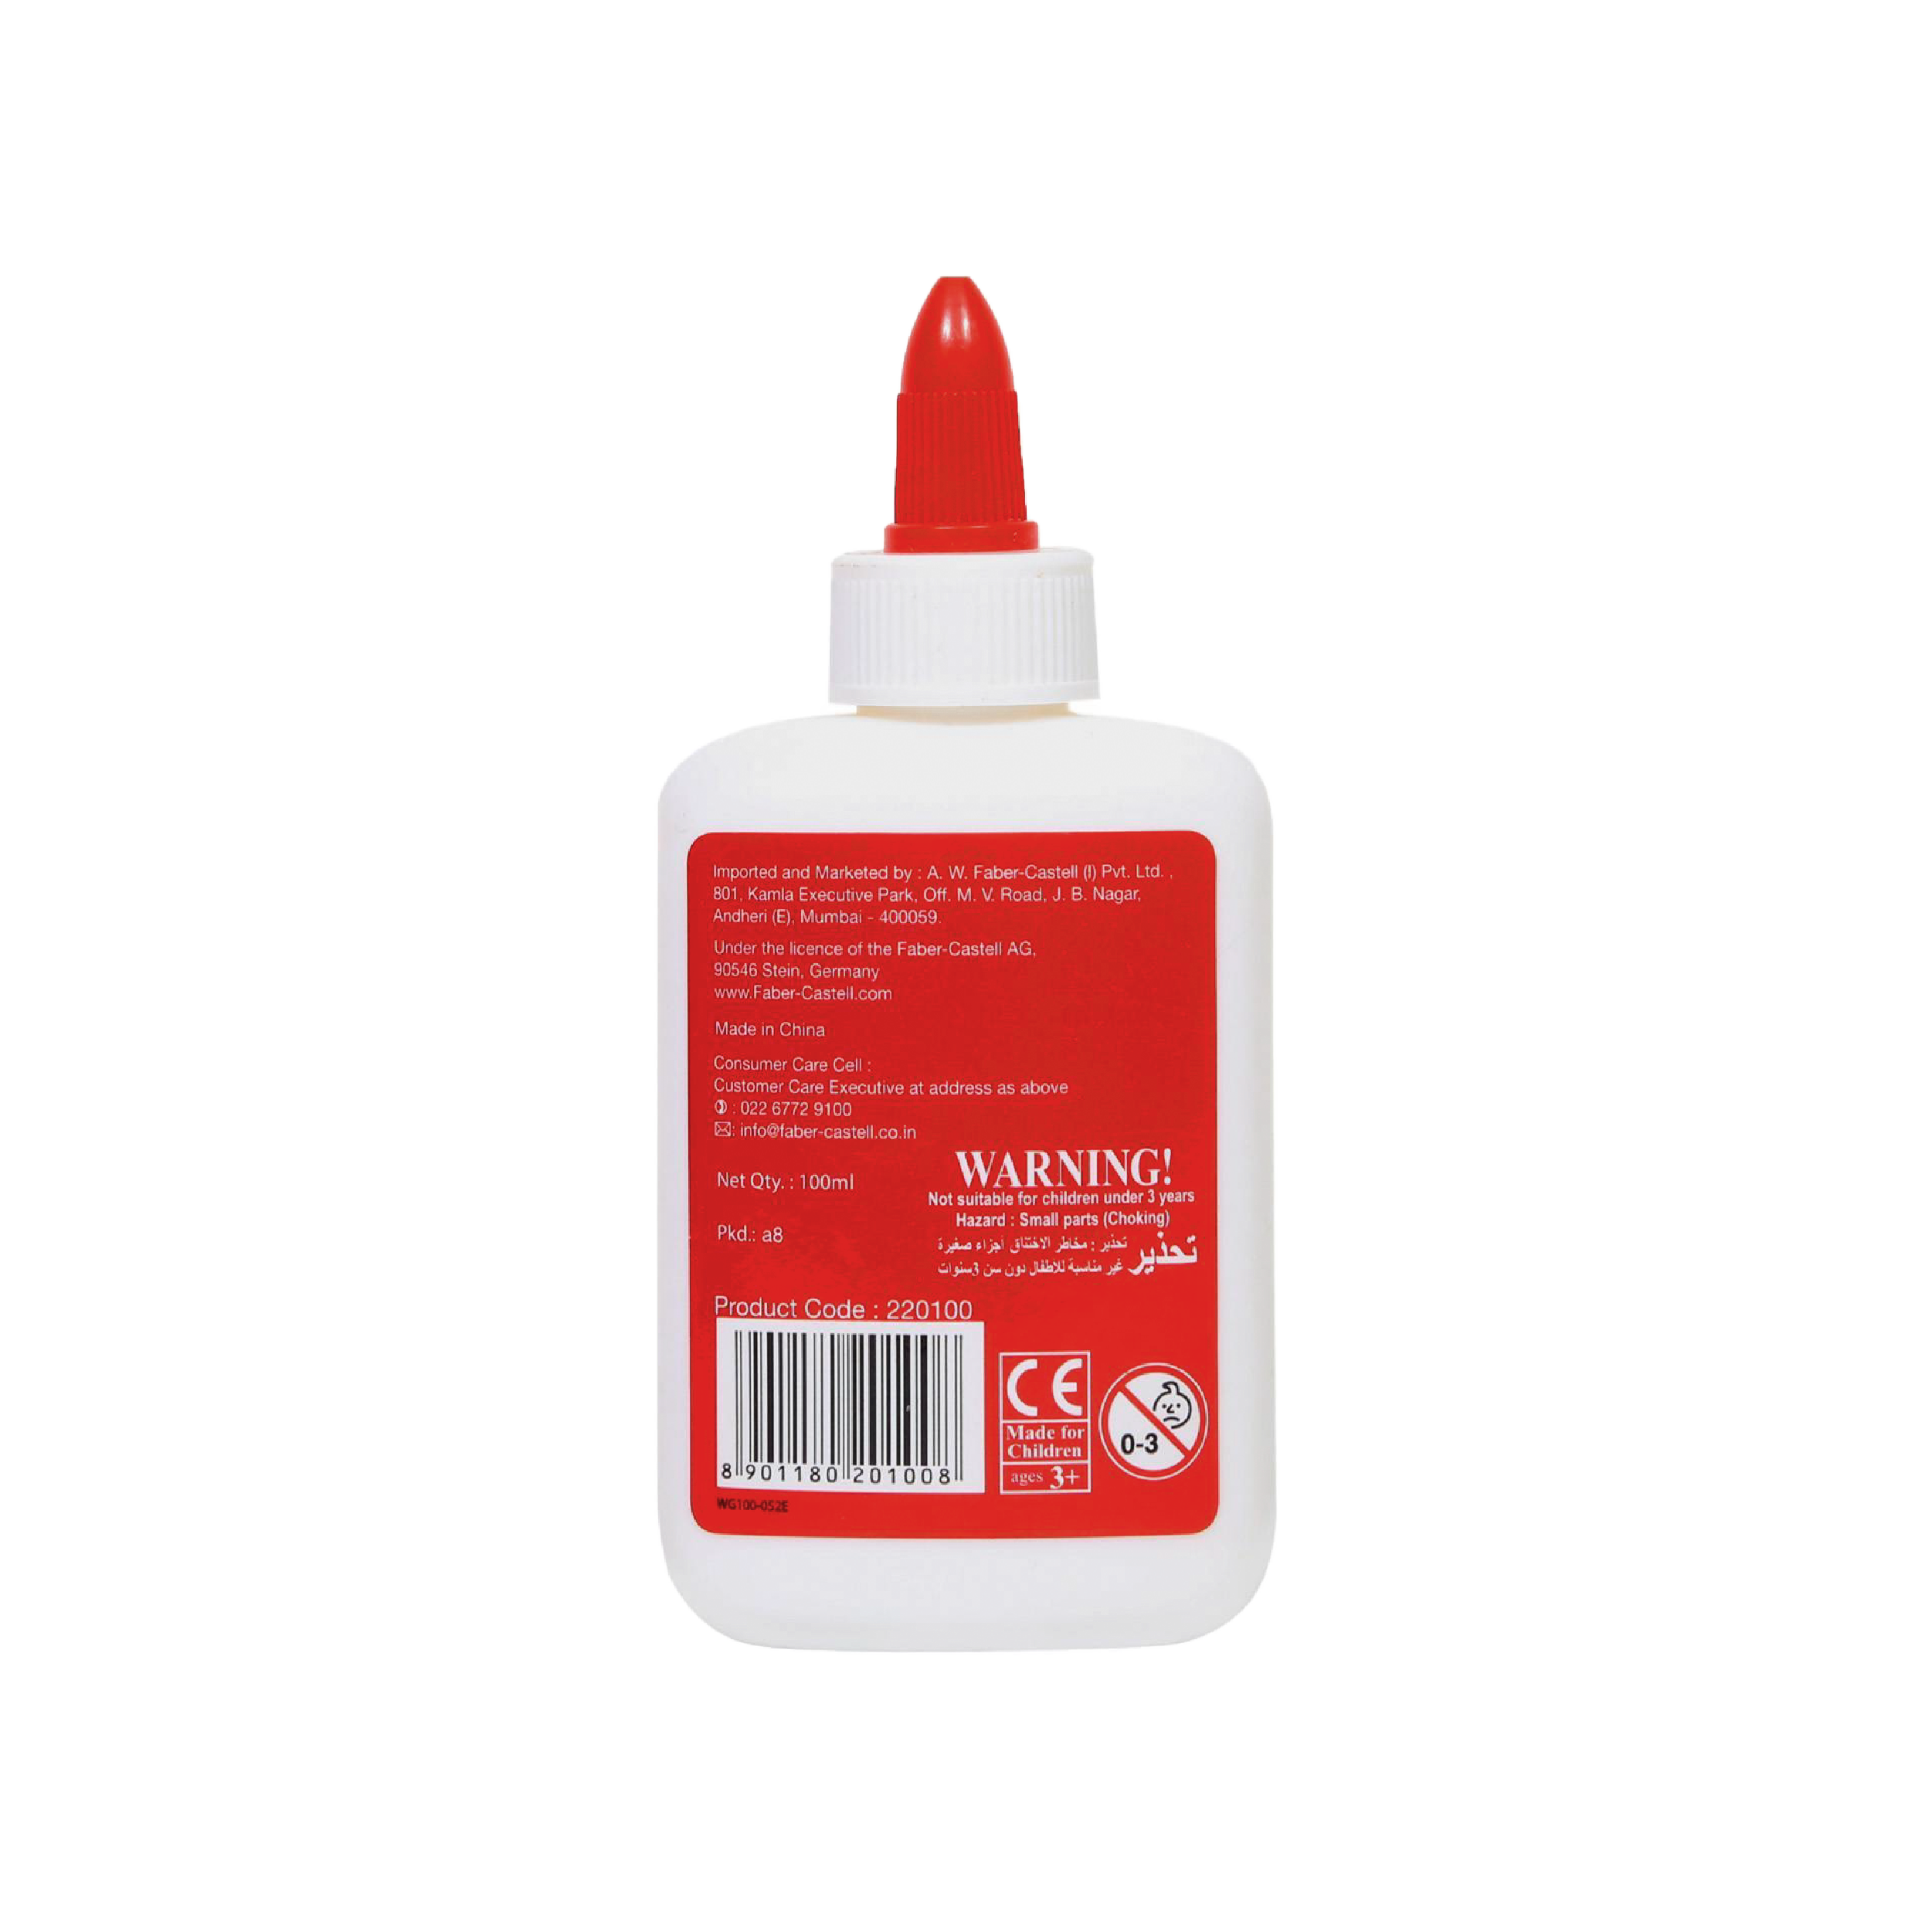 Faber-Castell White Glue, 100ml (220110)